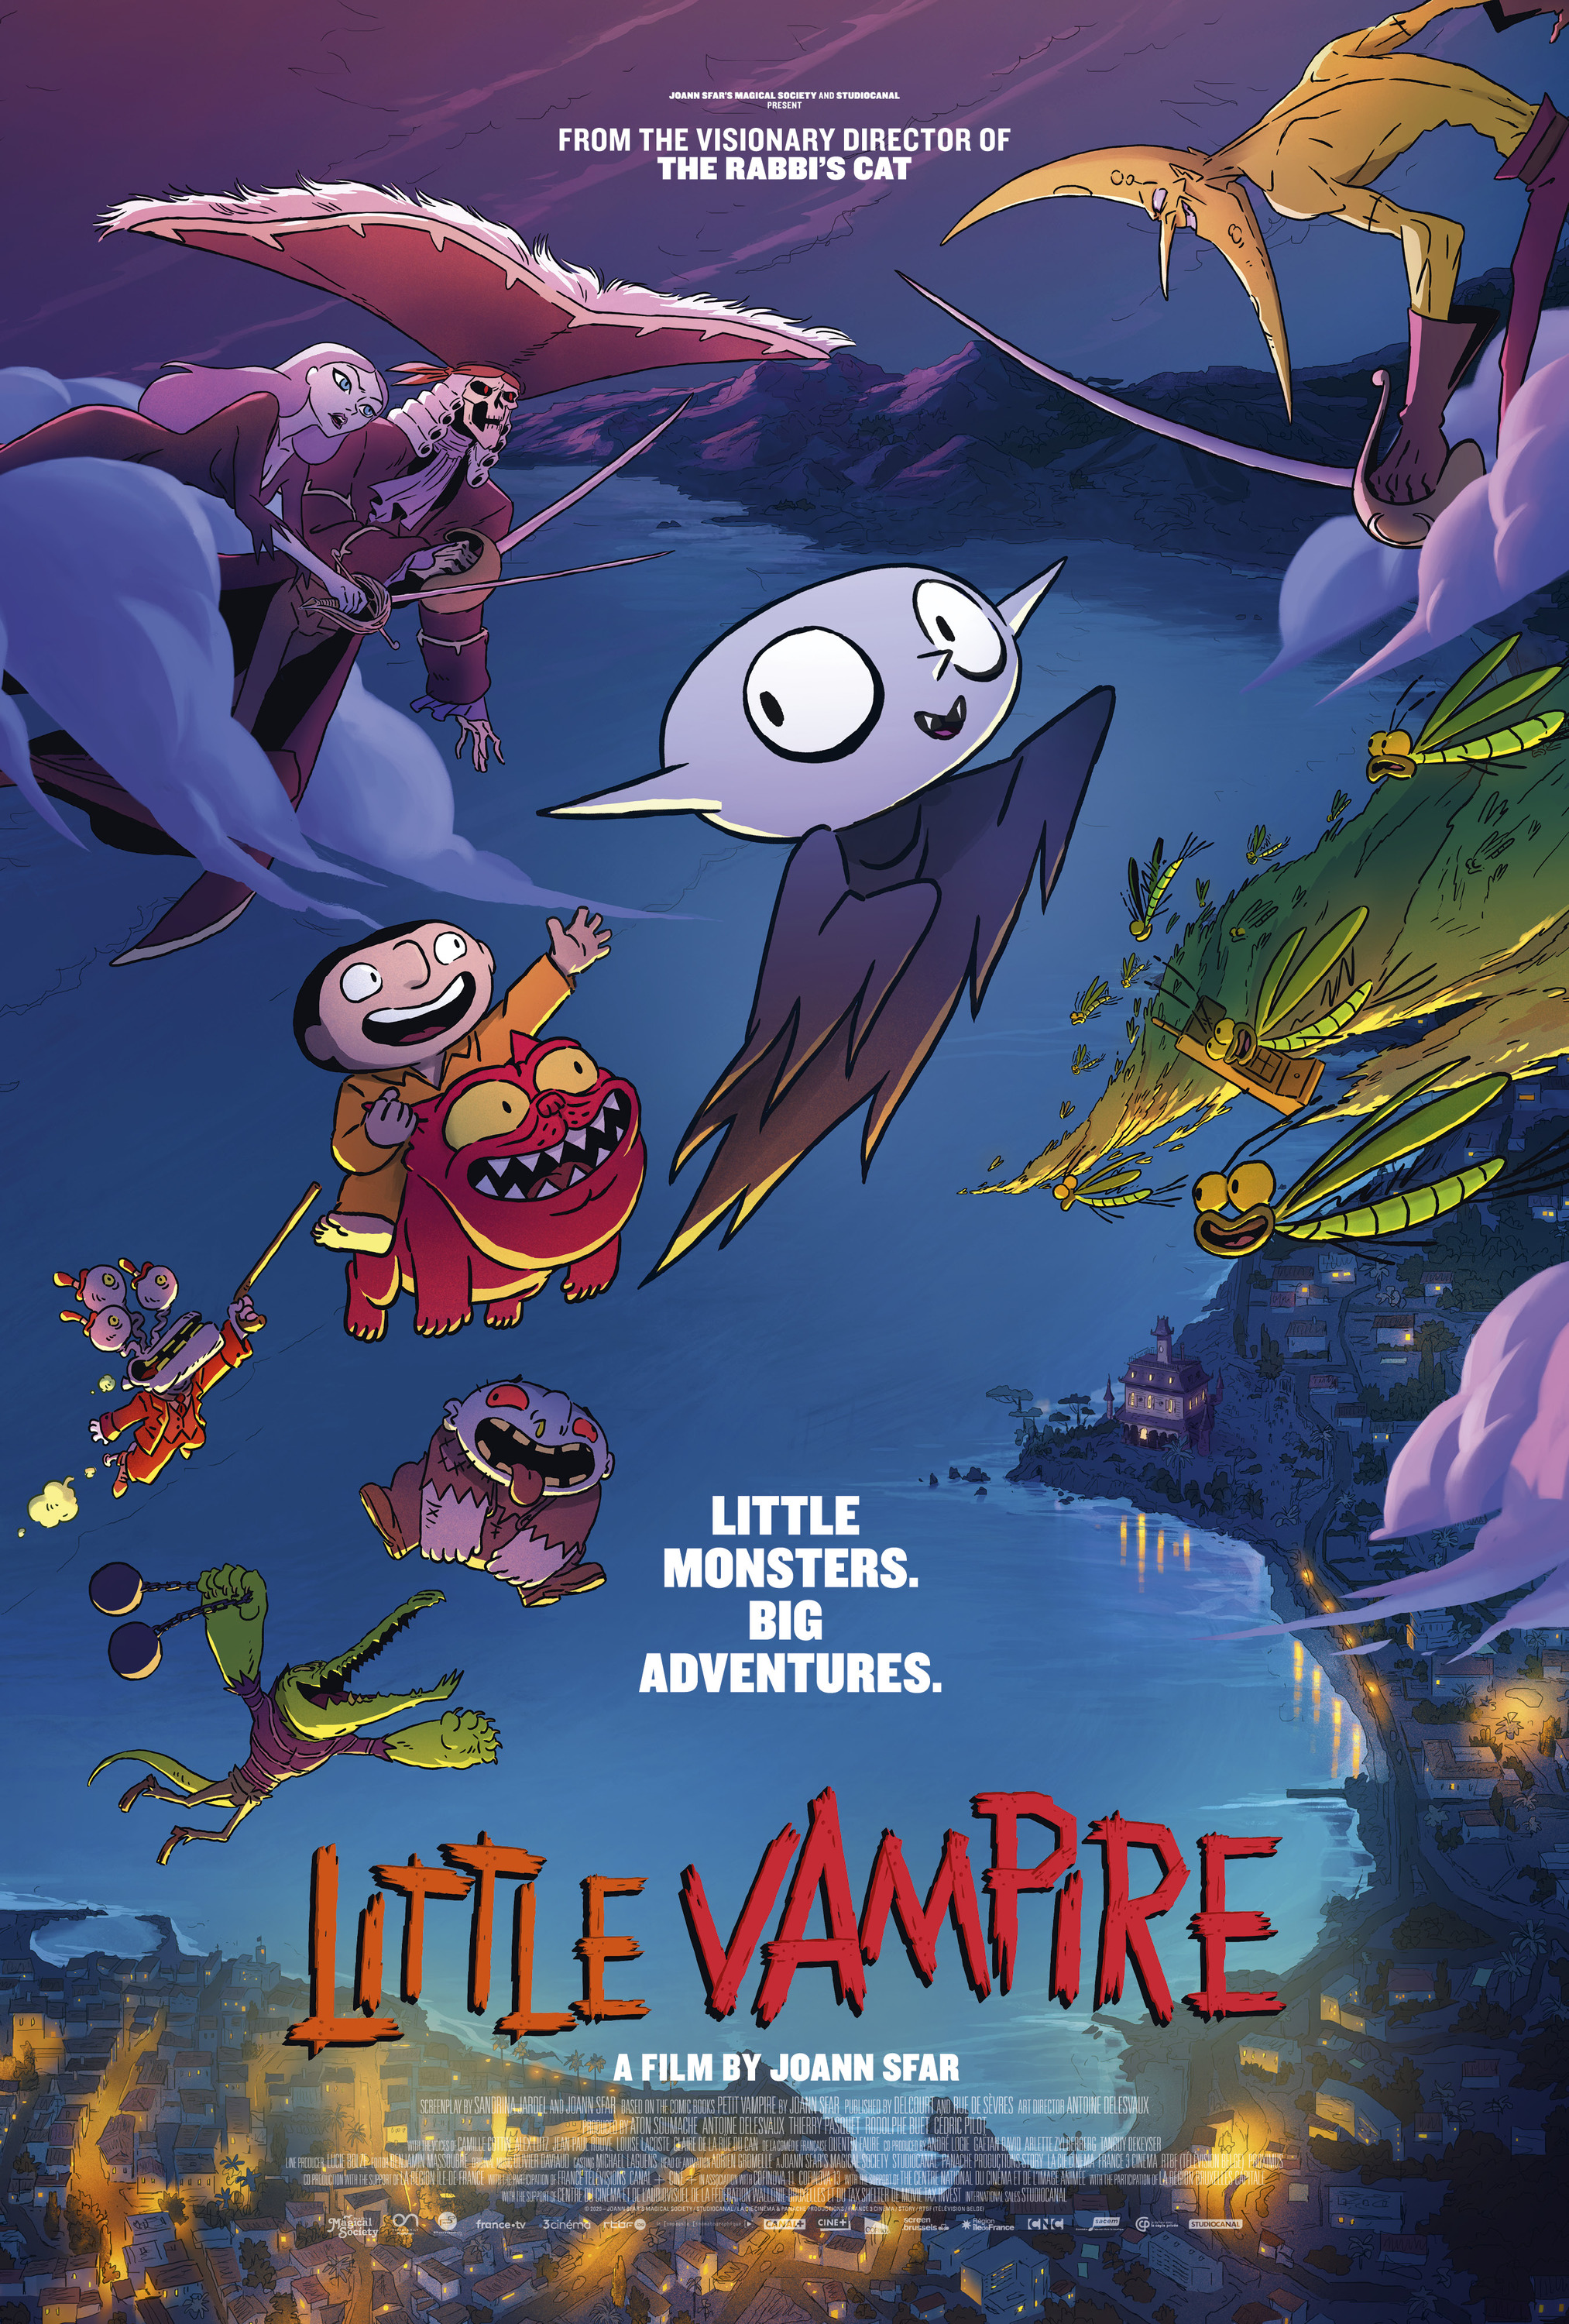 Mega Sized Movie Poster Image for Petit vampire (#3 of 3)